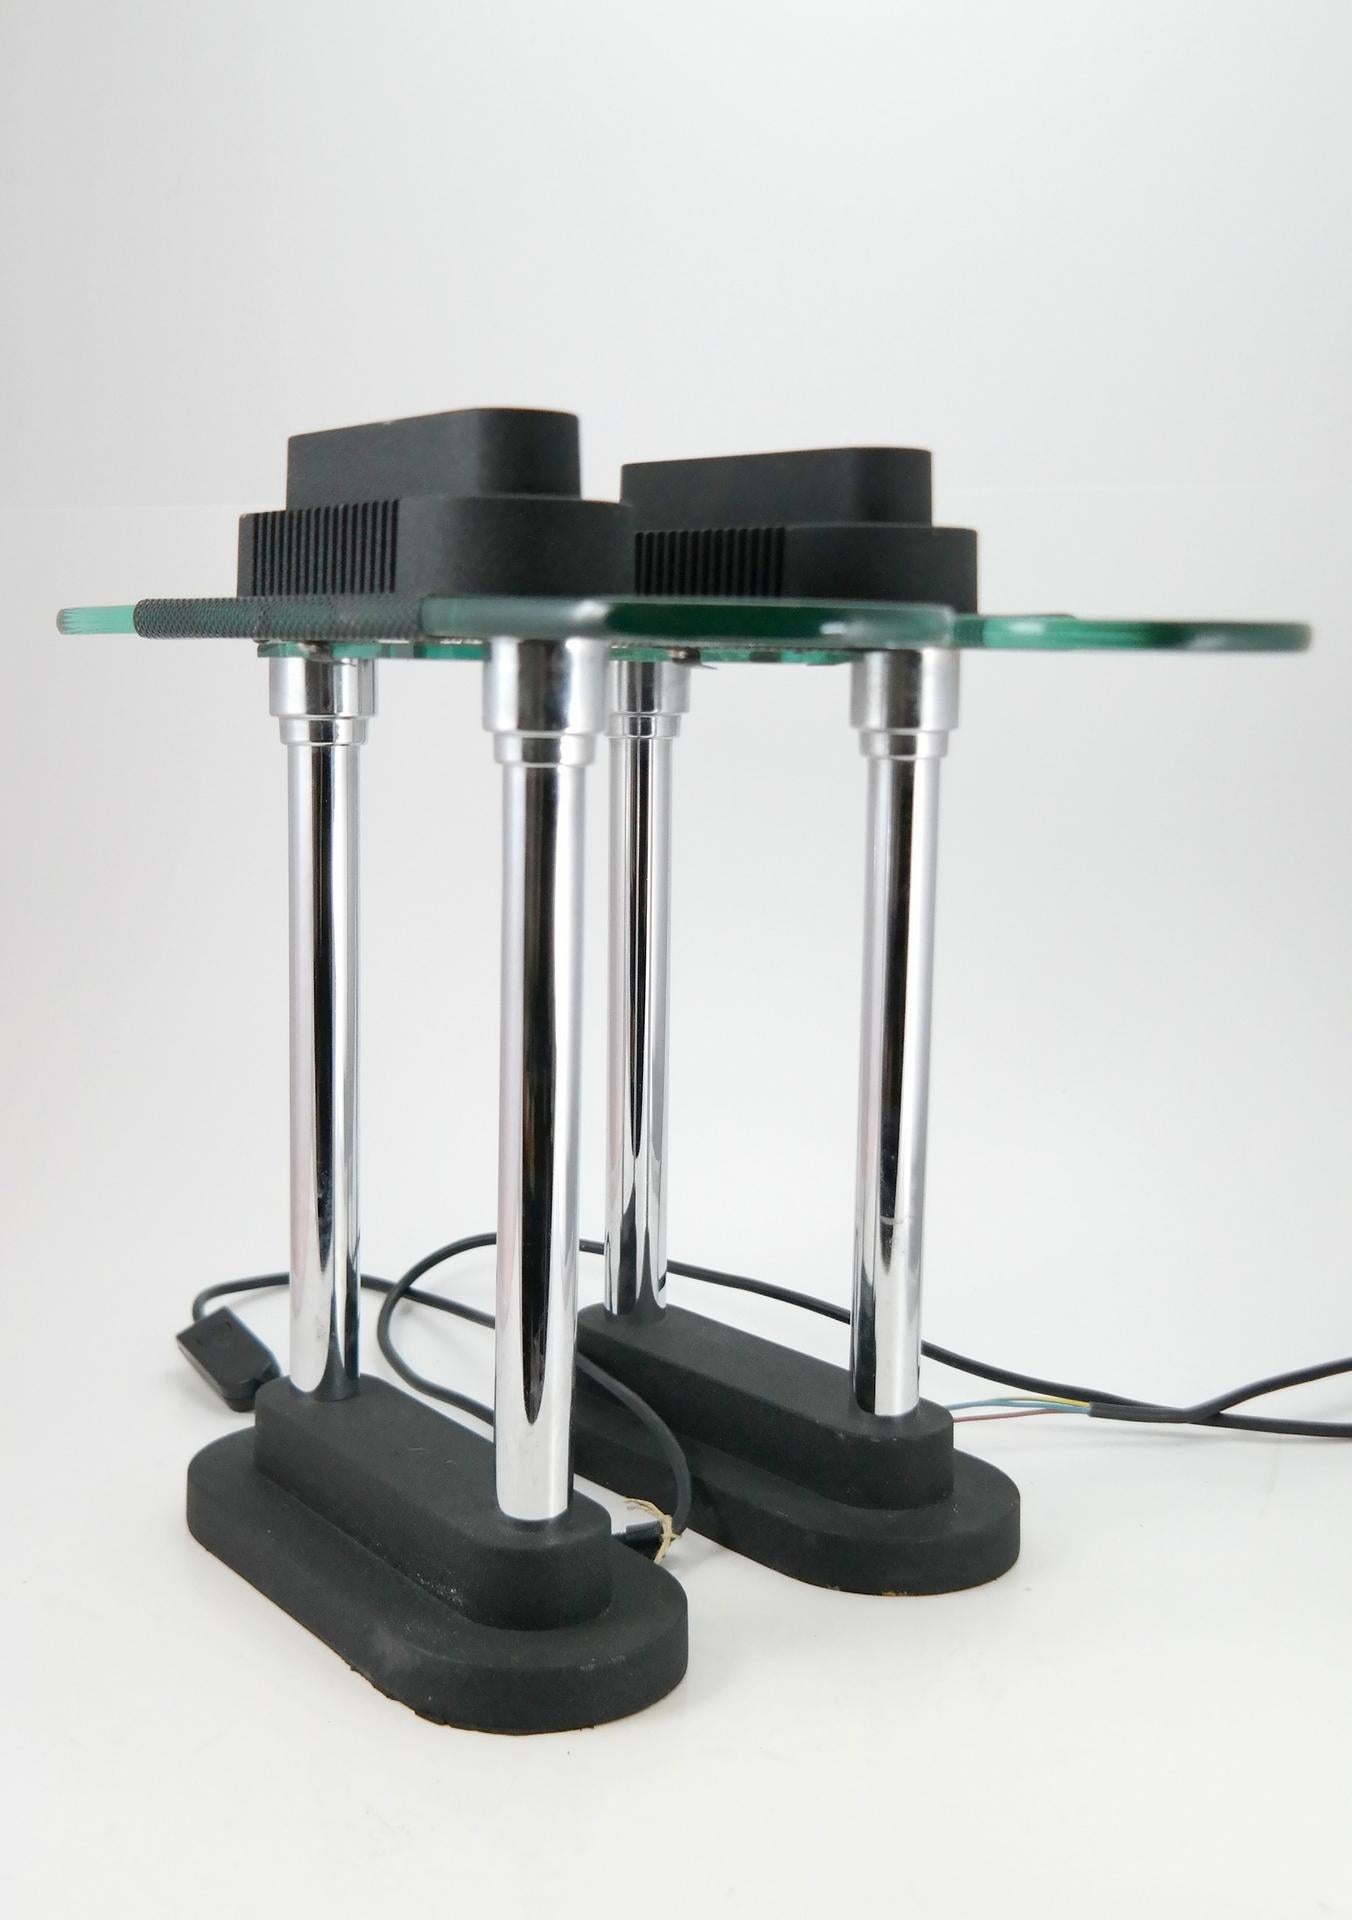 Pair of table lamp by Robert Sonneman 1980s -extraordinary Postmodern design.